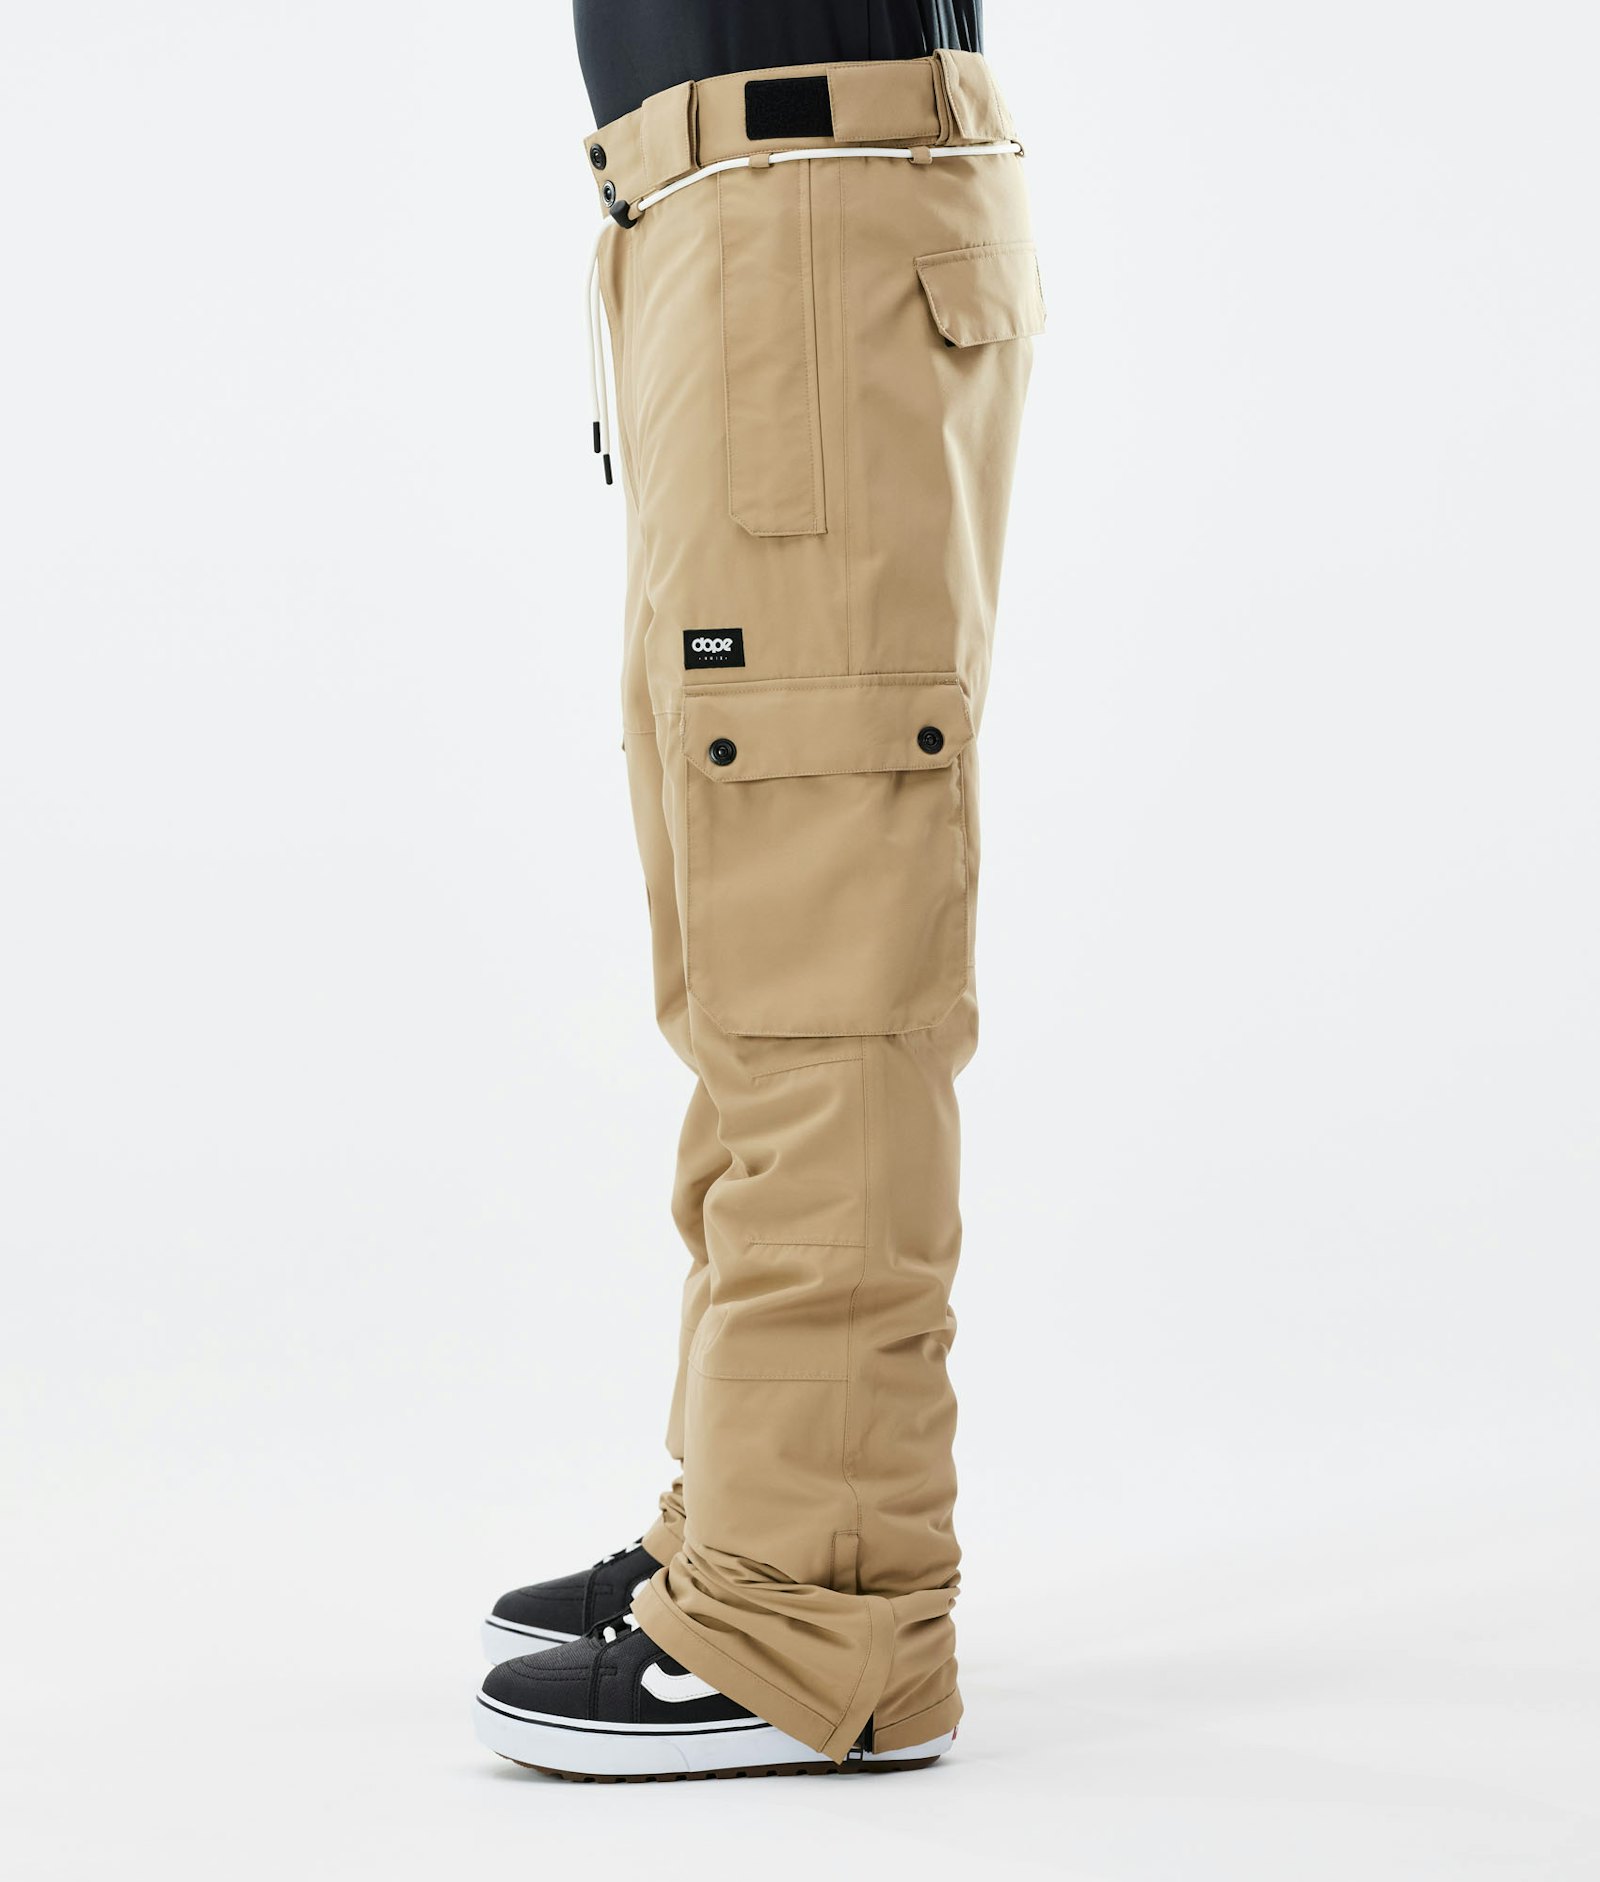 Iconic 2021 Pantalon de Snowboard Homme Khaki